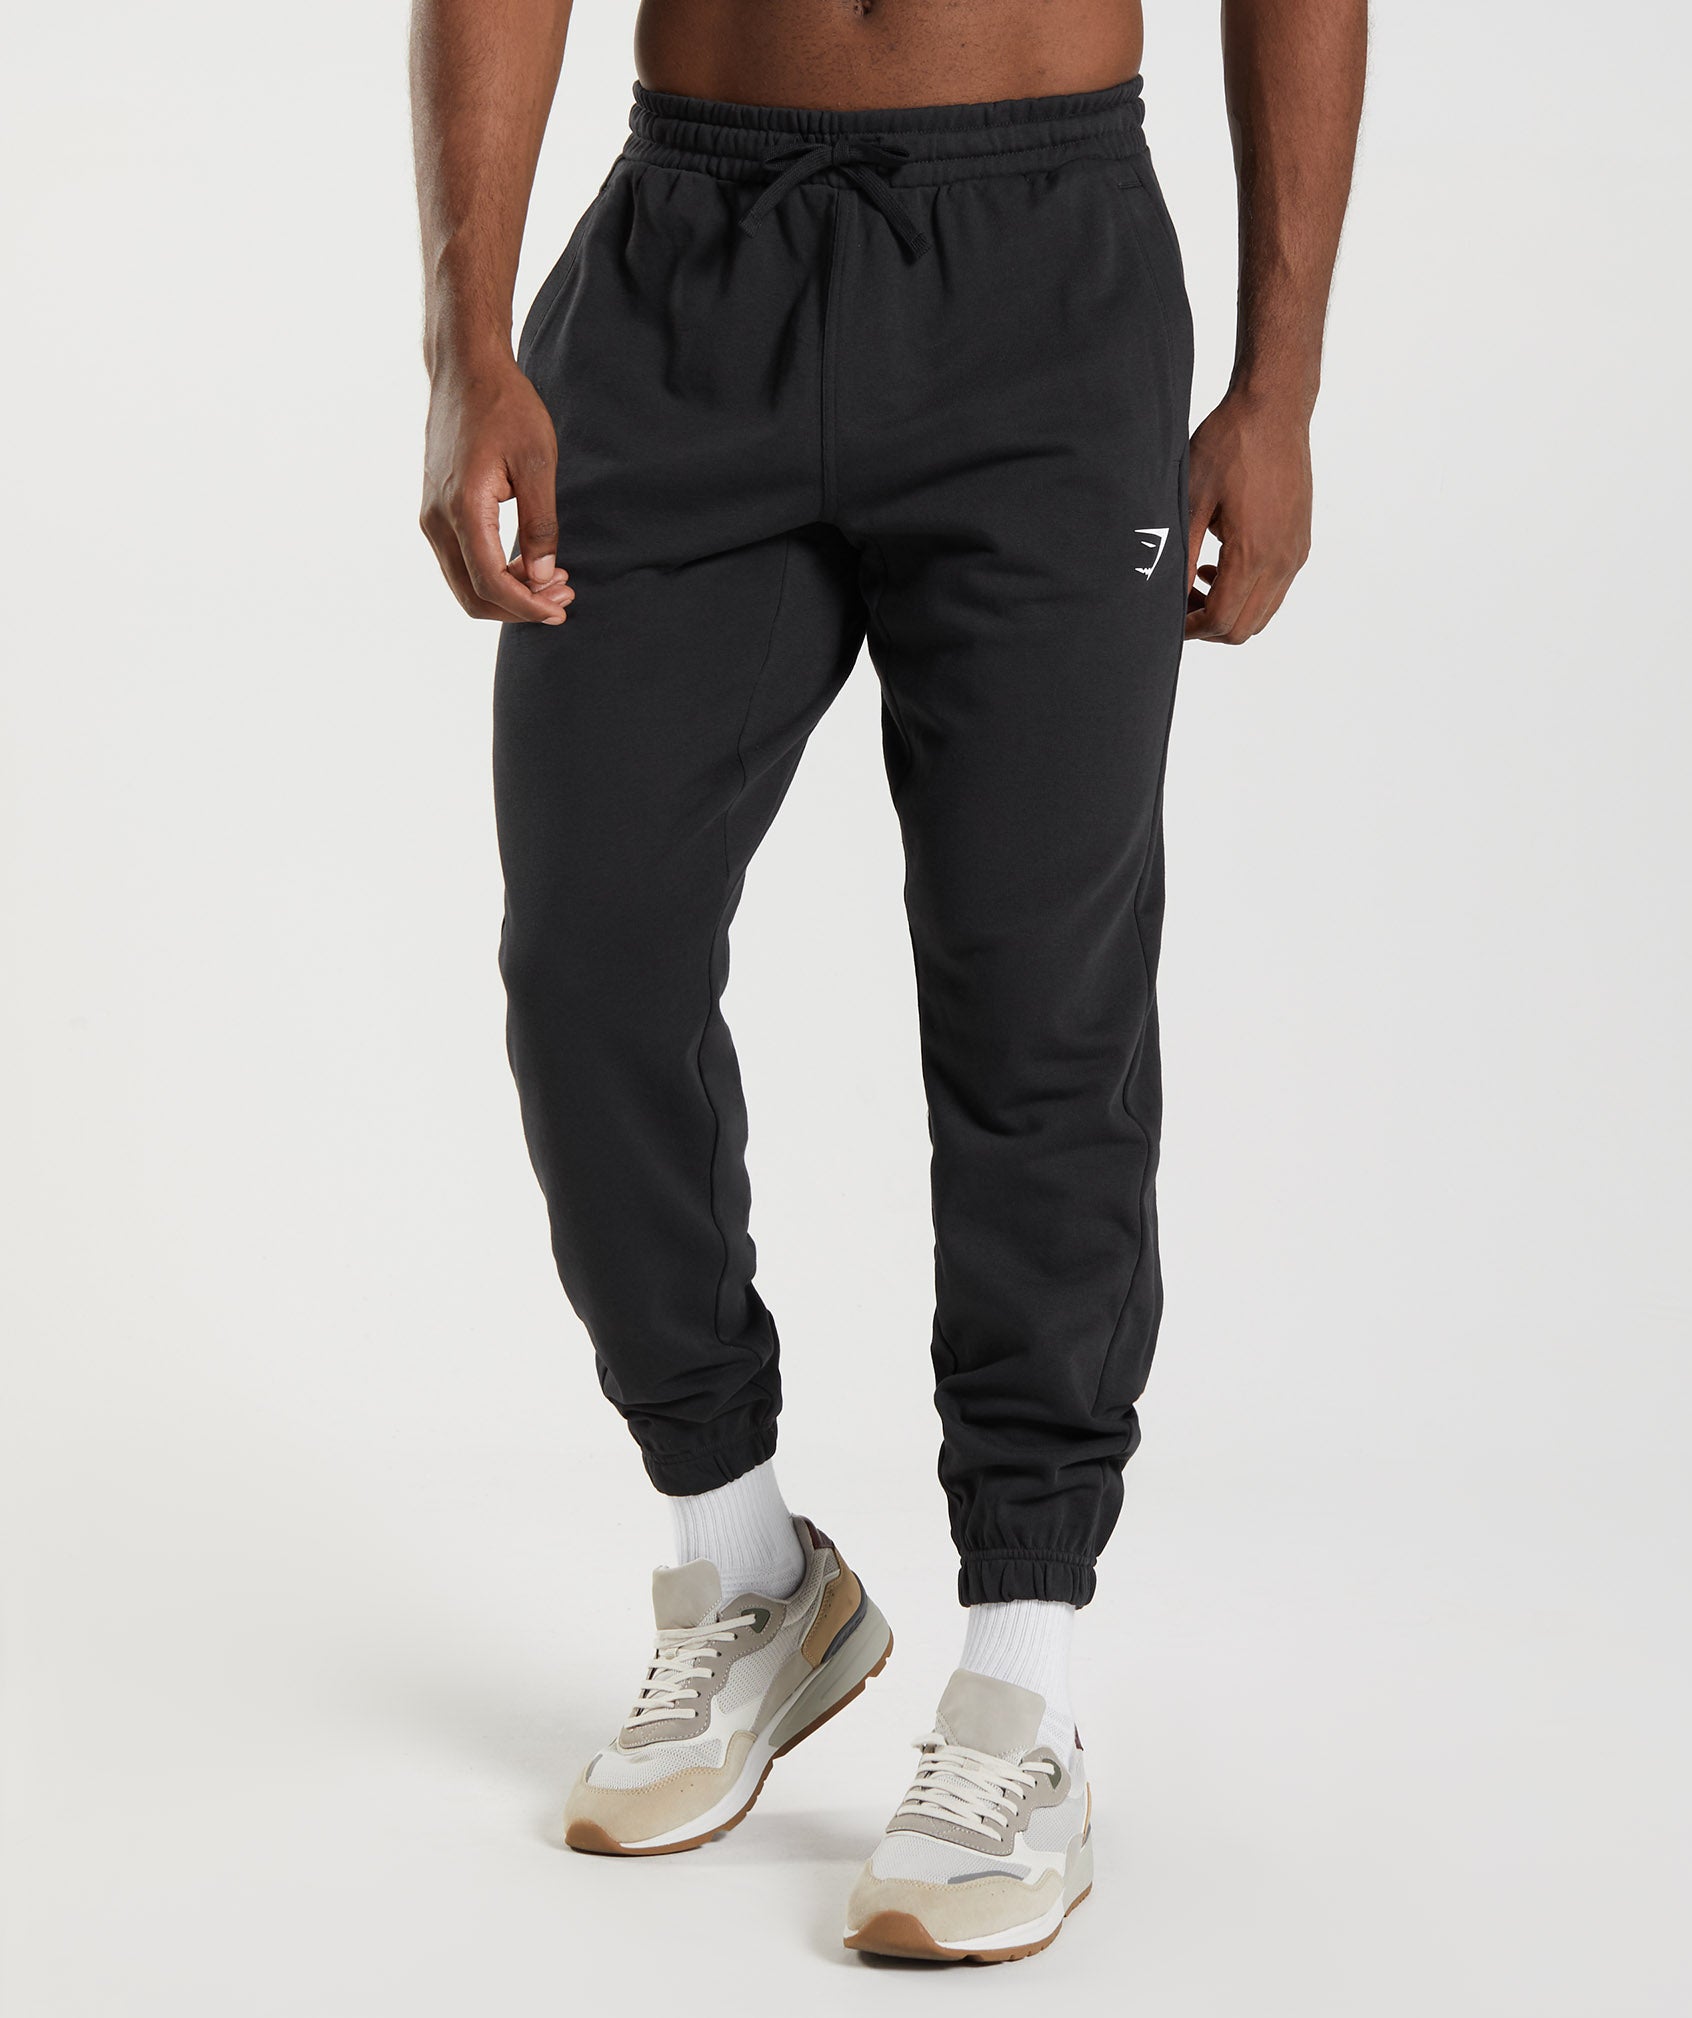 Men's Black Sweatpants & Black Joggers